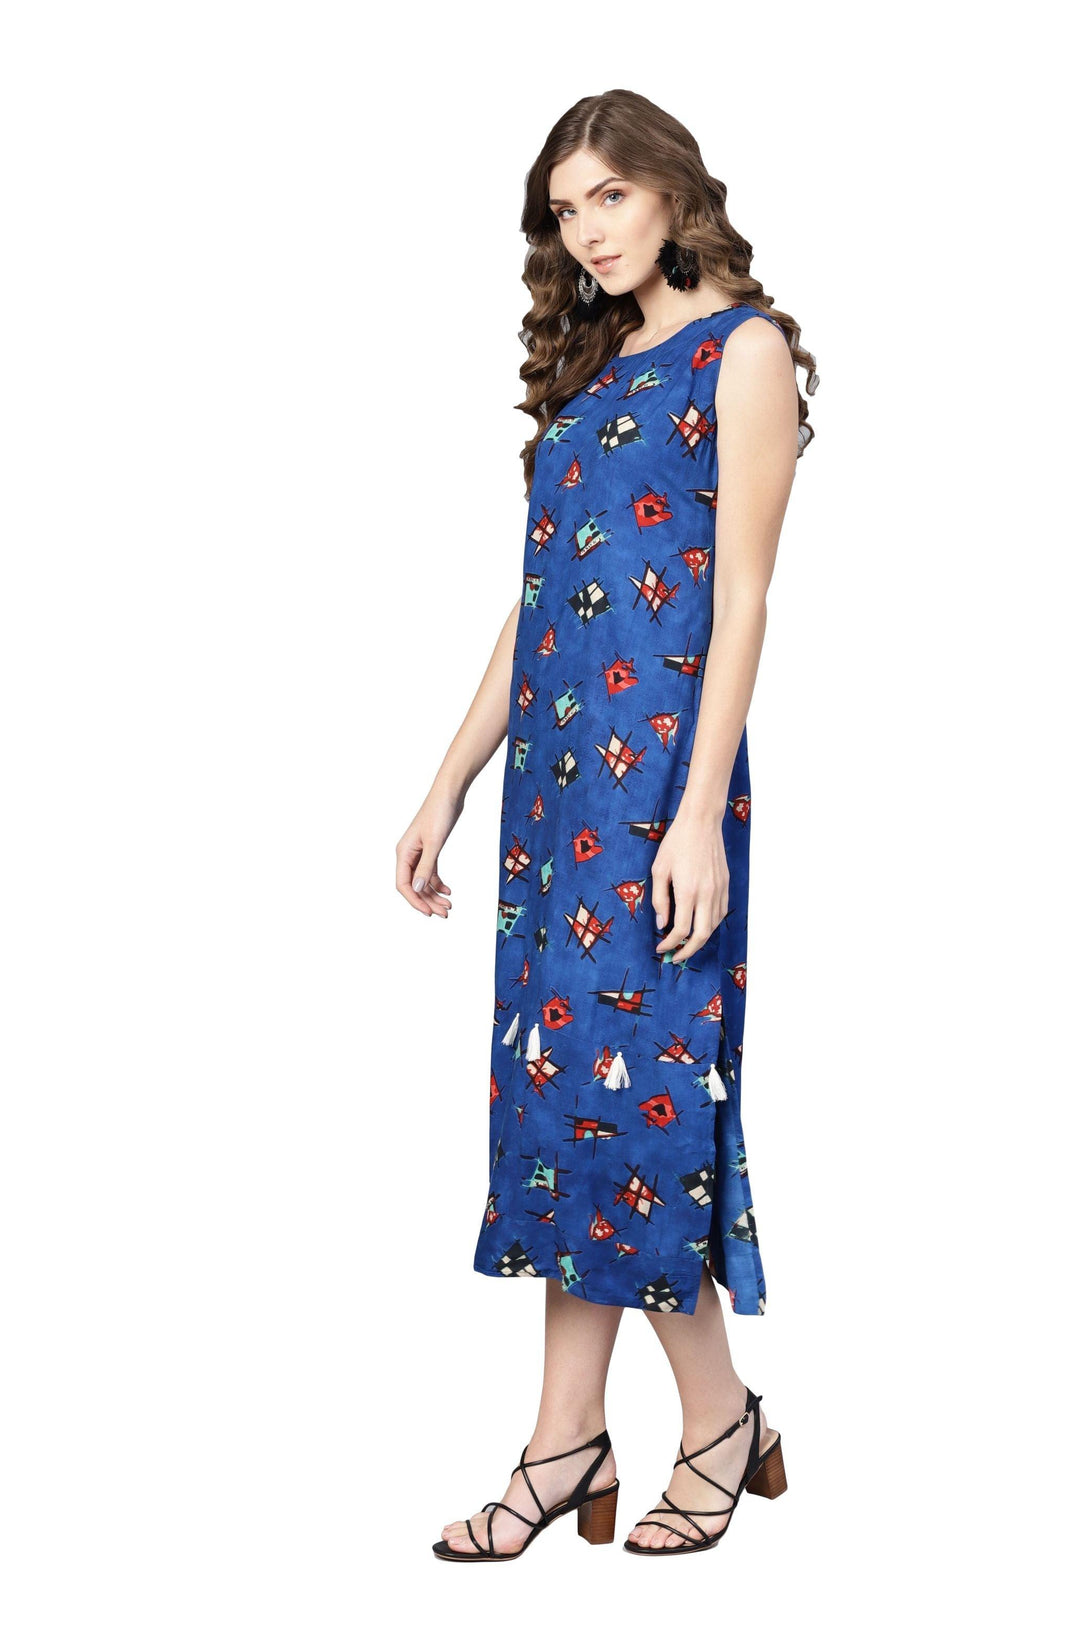 Women's Blue Rayon Printed Sleveeless Round Neck Dress - Myshka - Indiakreations